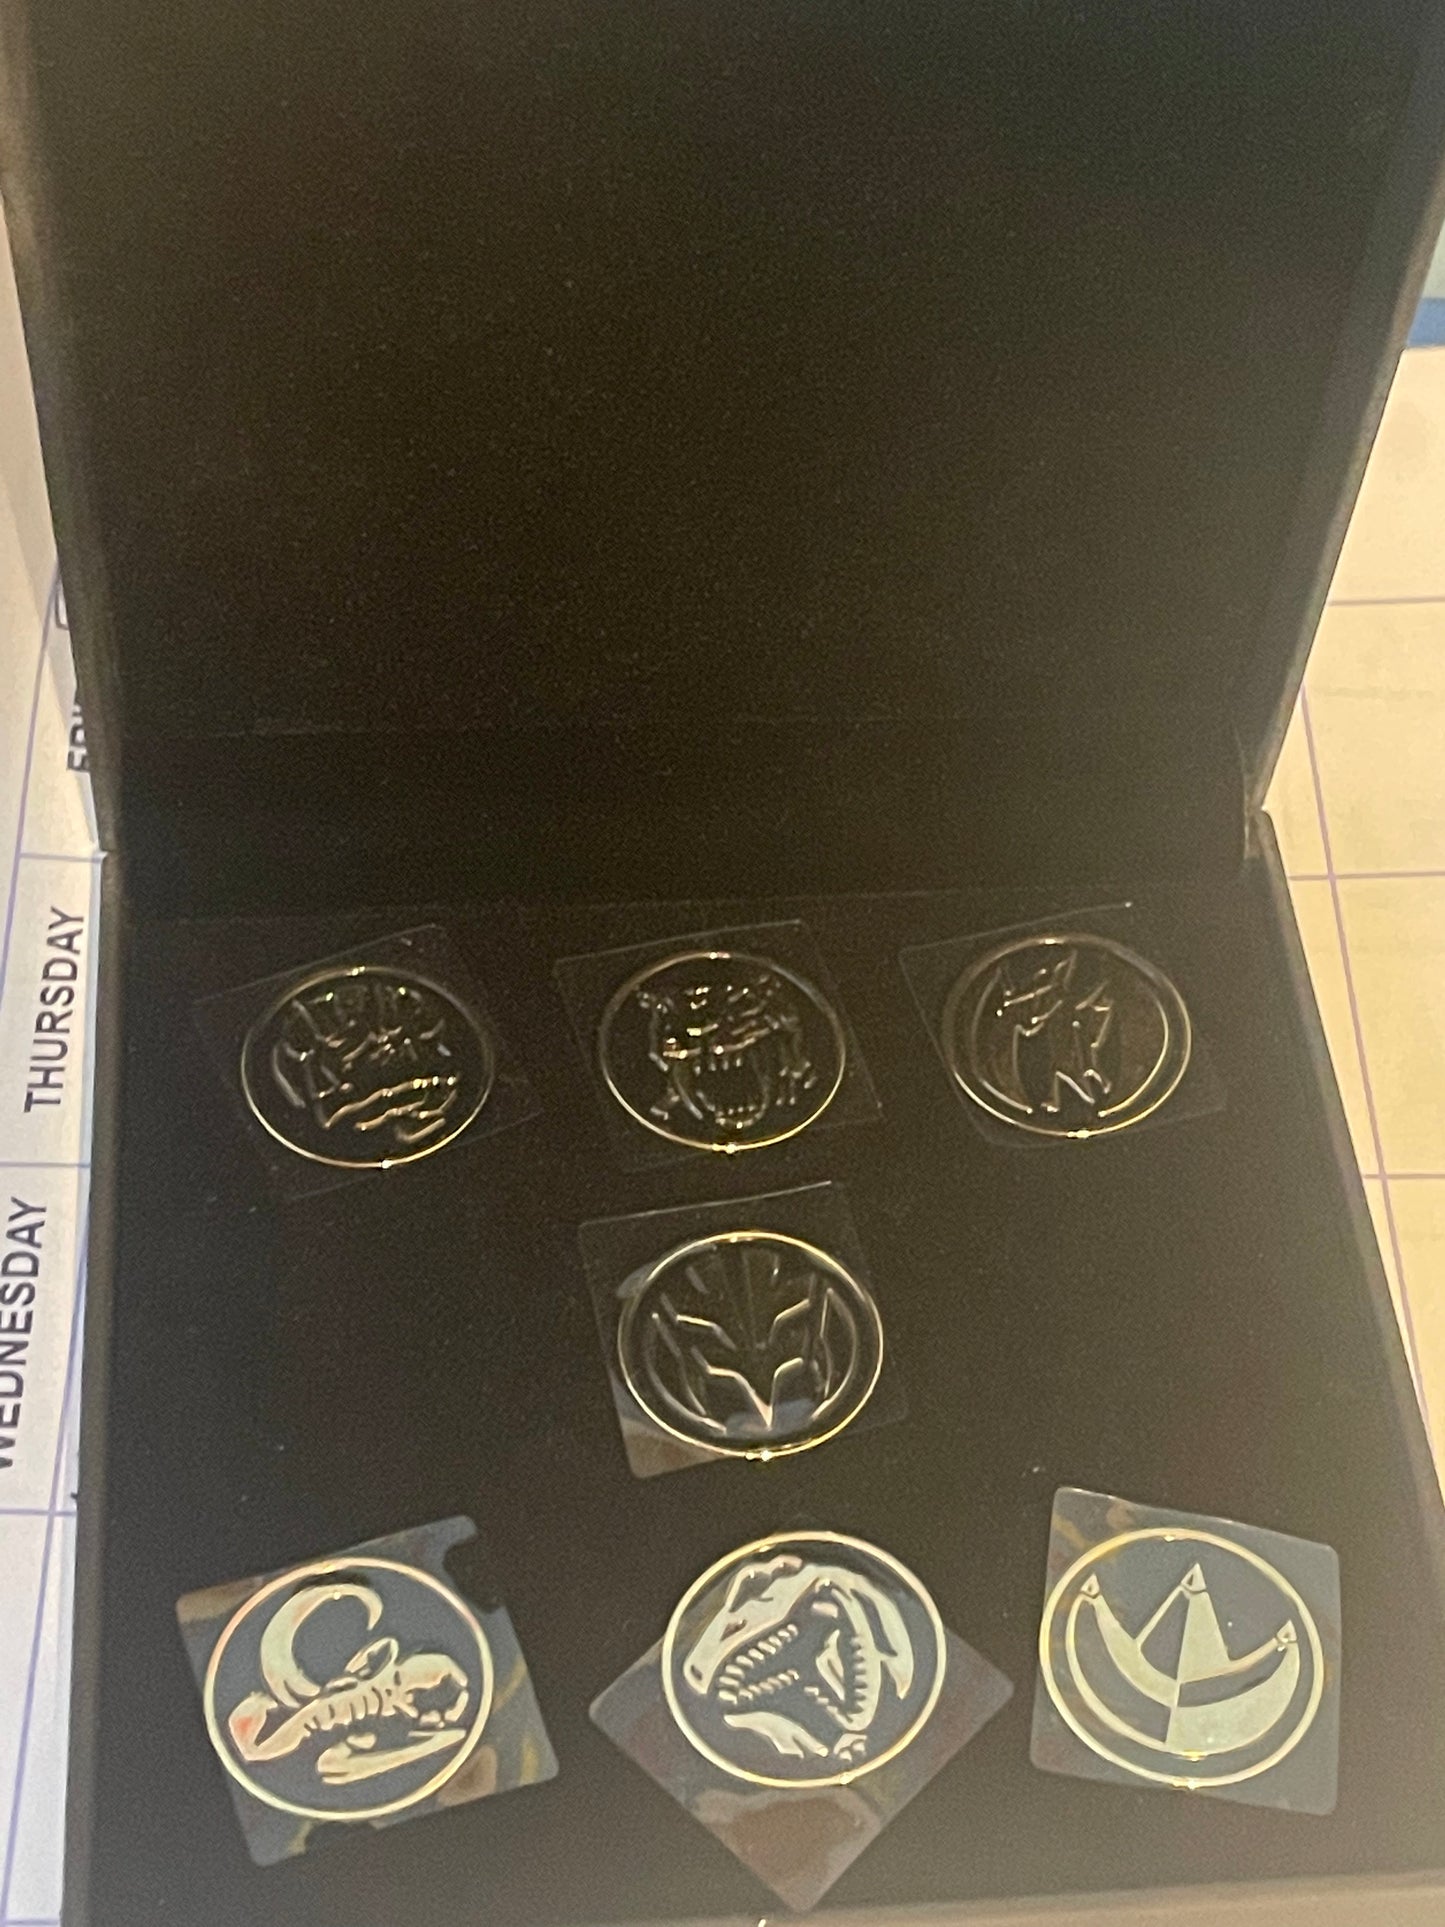 MMPR Power Rangers SDCC Exclusive 24 karat gold Pin set